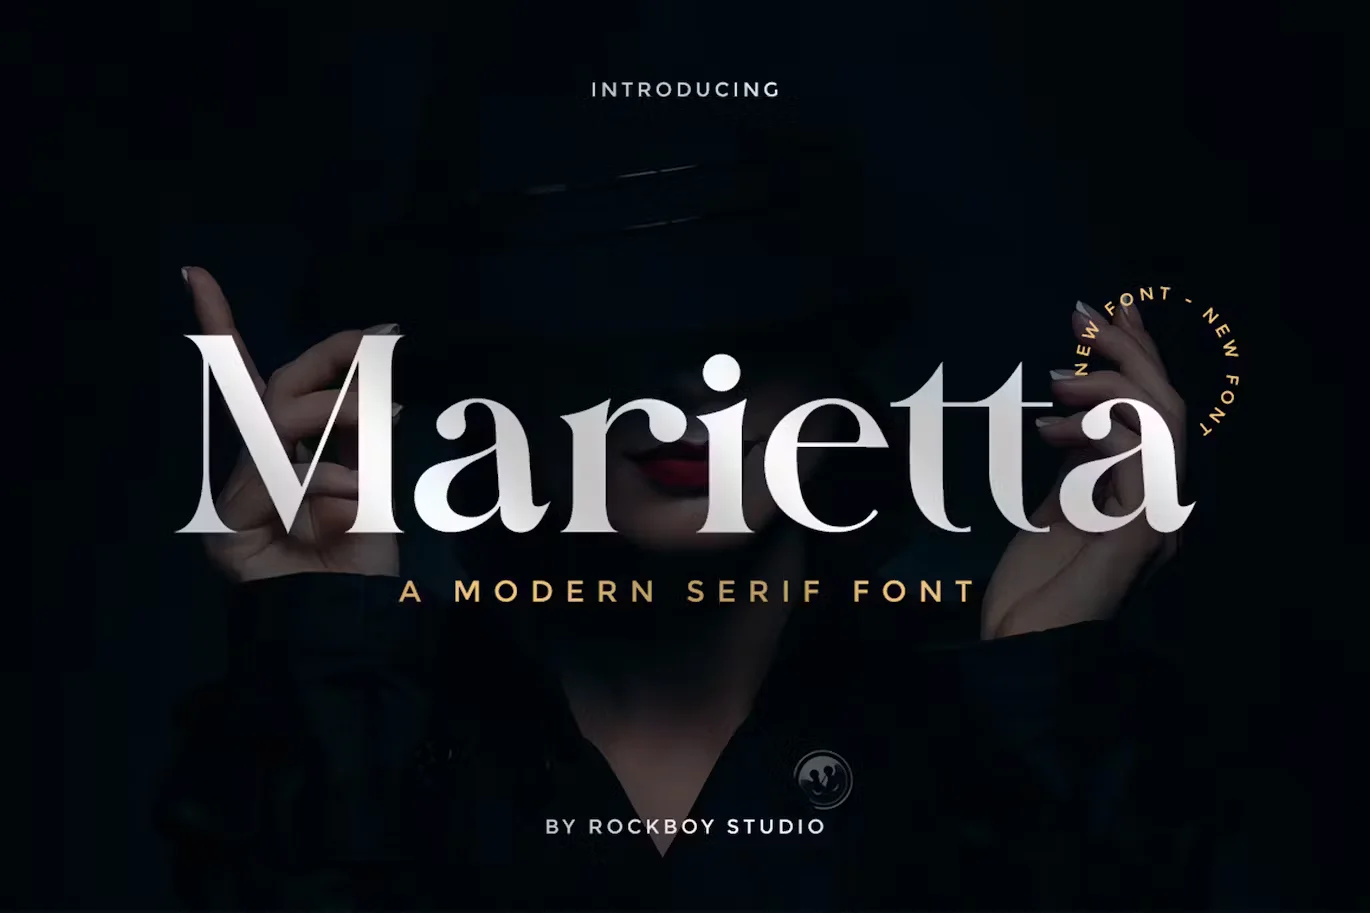 Marietta - Business Font